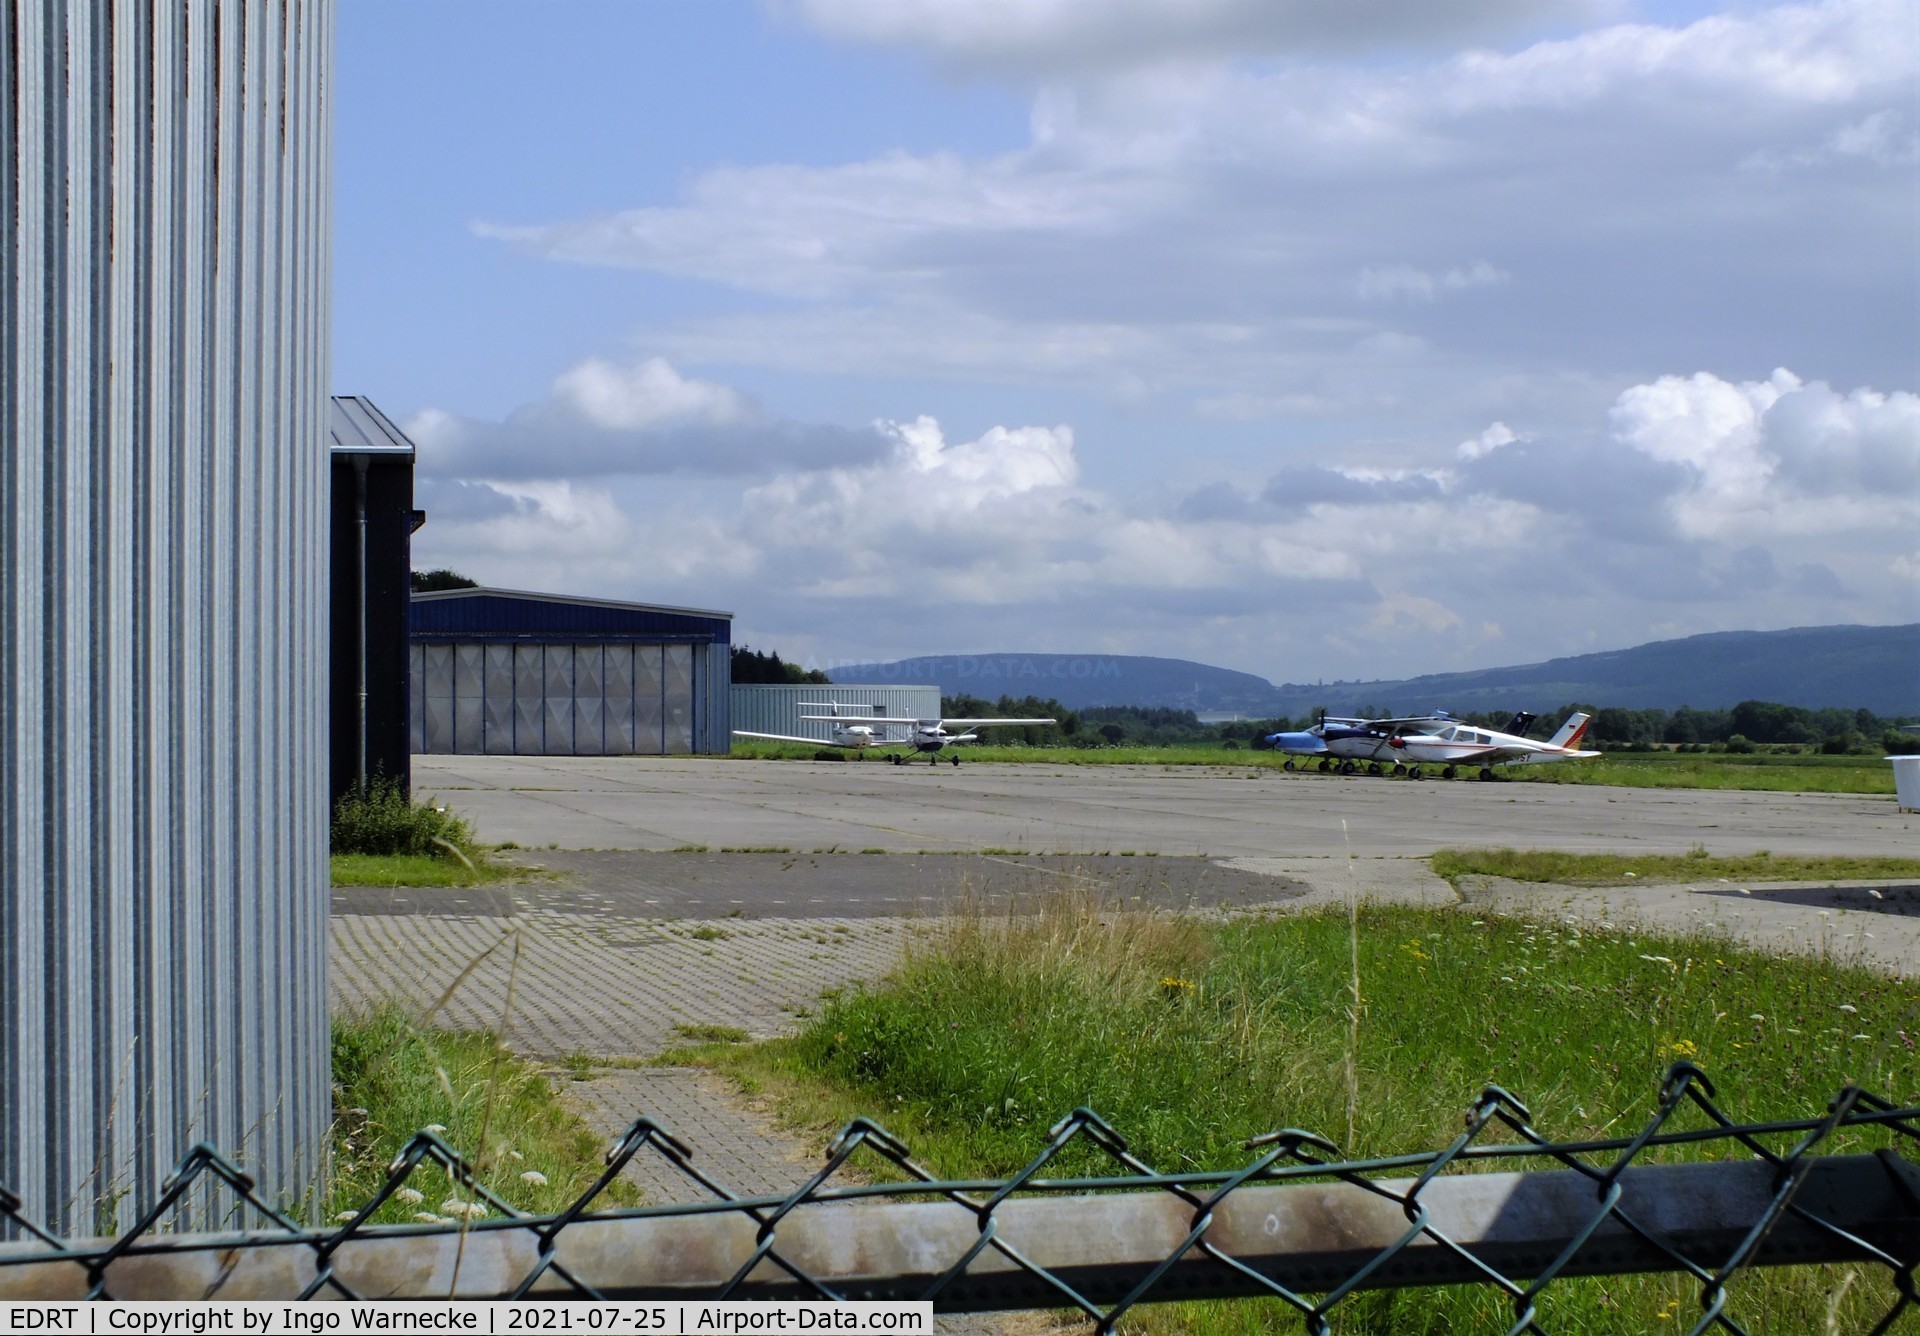 EDRT Airport - hangars and apron at Trier-Föhren airfield